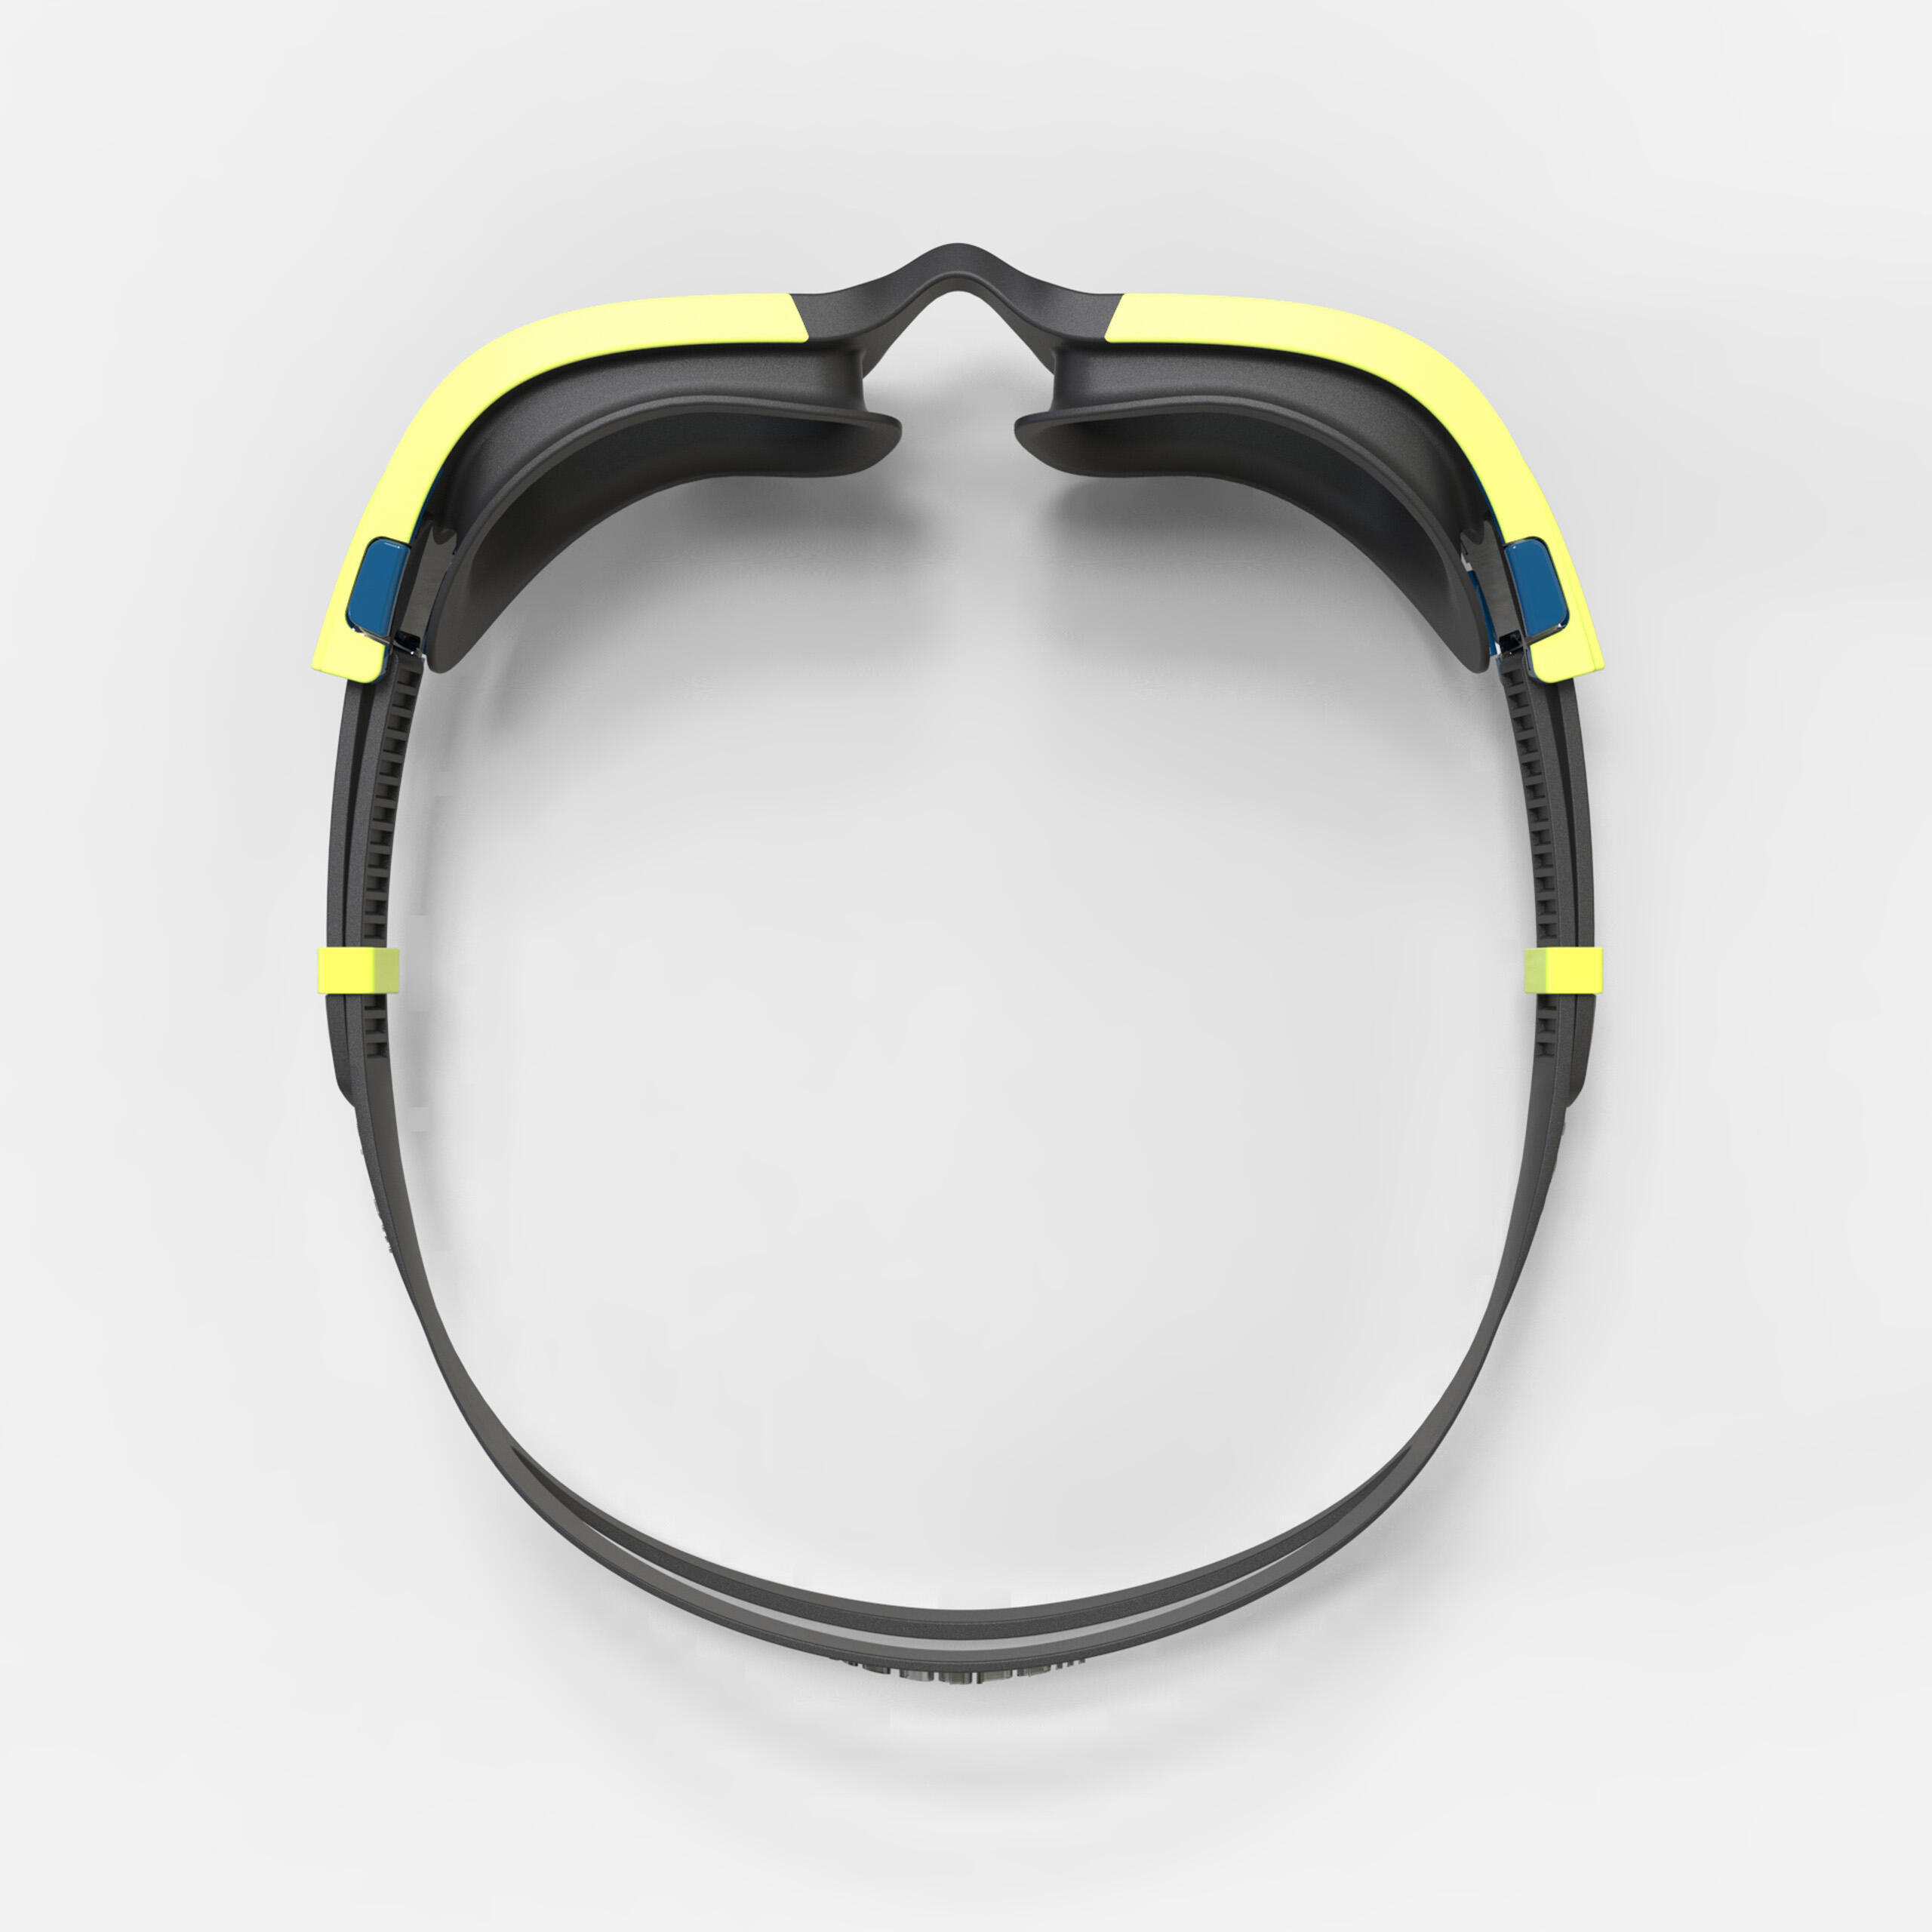 Swimming goggles SPIRIT - Smoked lenses - Size small - Black yellow 4/5